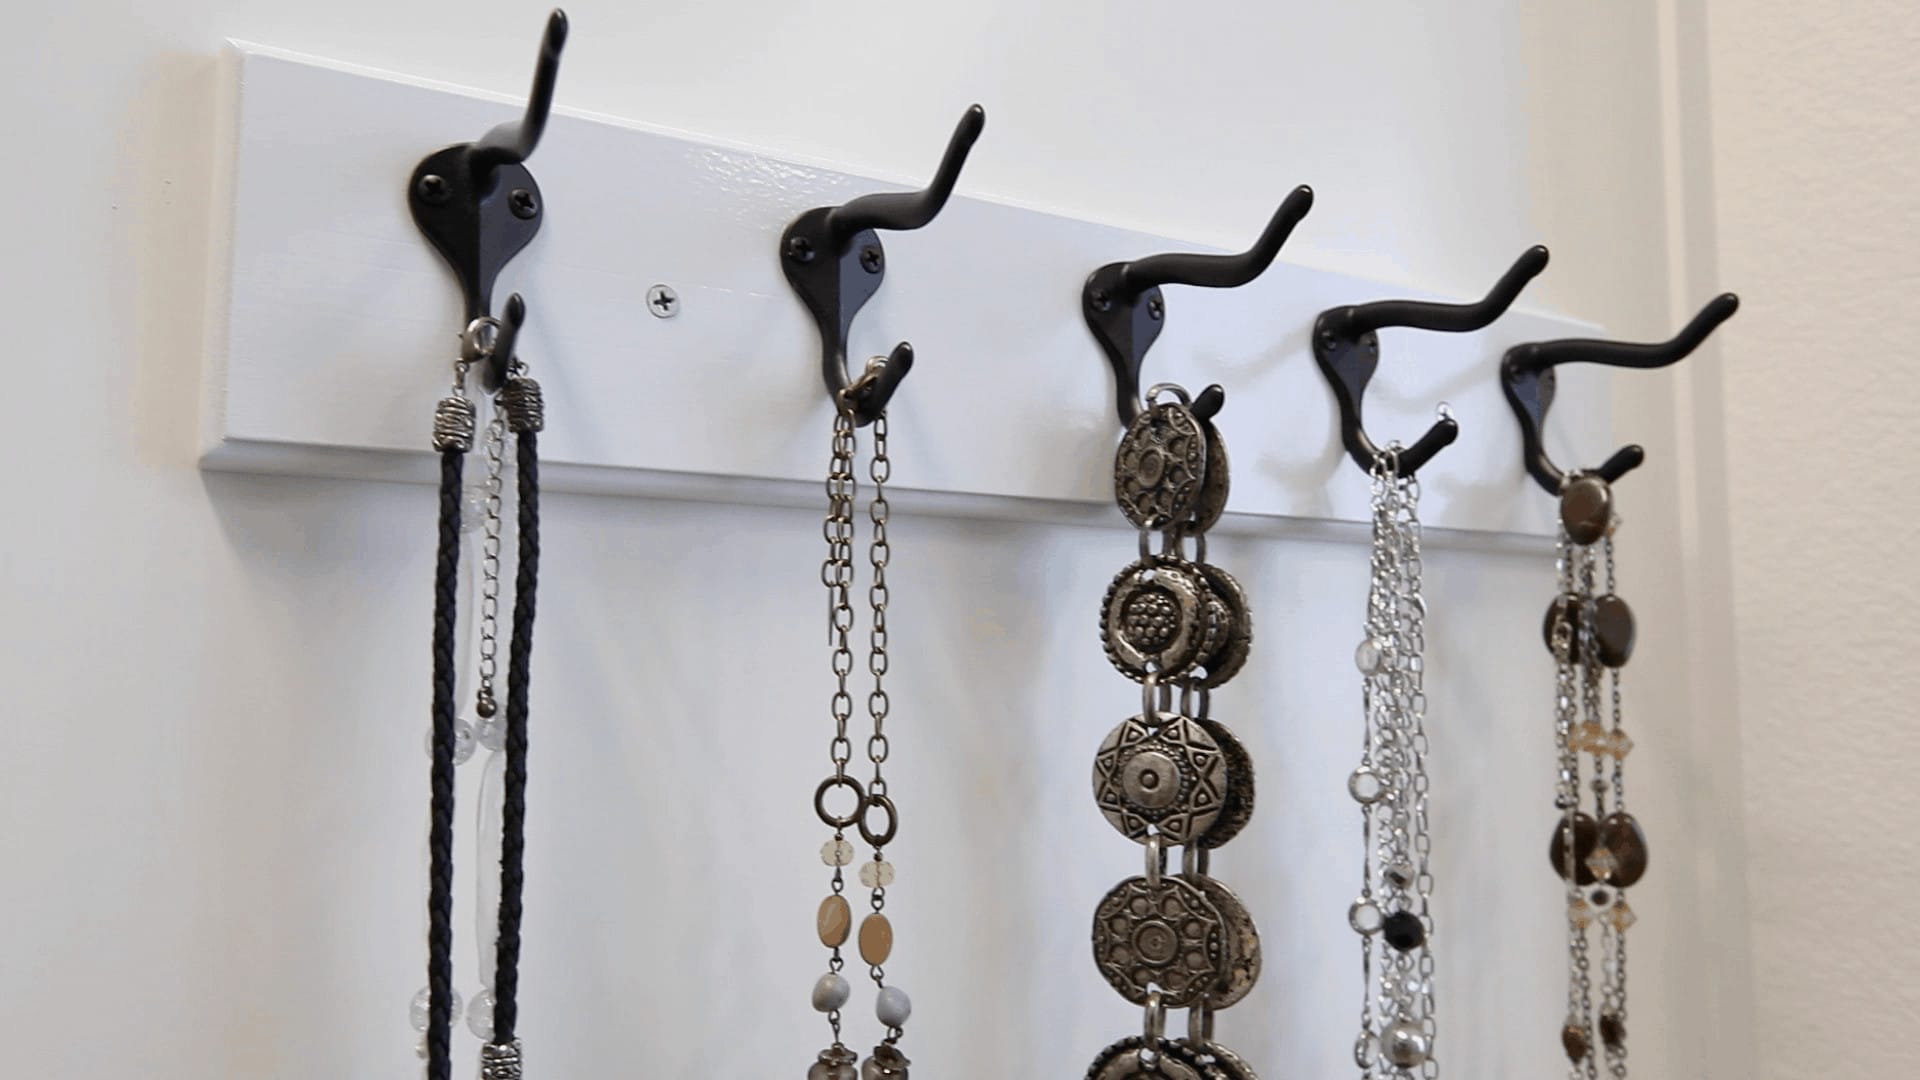 https://www.thegeekpub.com/wp-content/uploads/2015/06/How-to-Make-Decorative-Closet-Hangers1.jpg